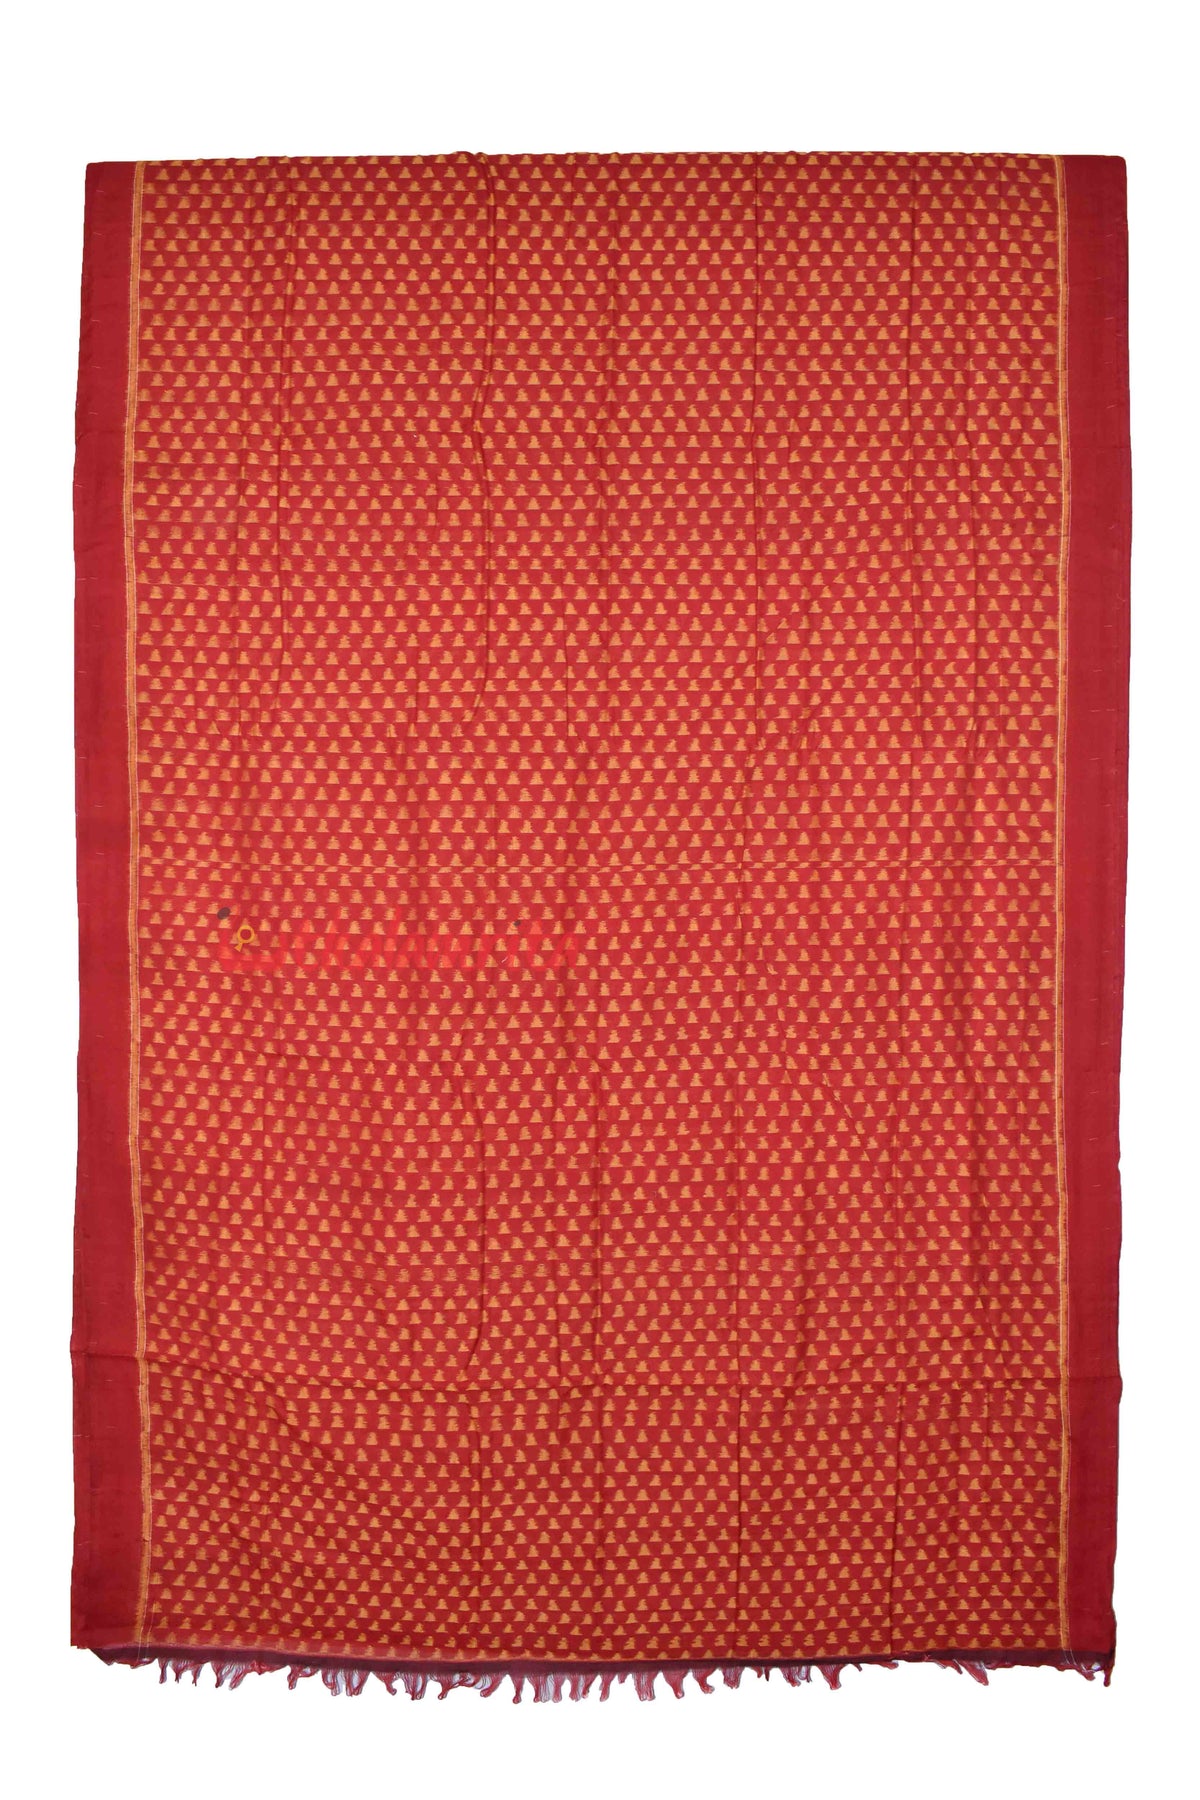 Triangle Design Red Mustard (Fabric)